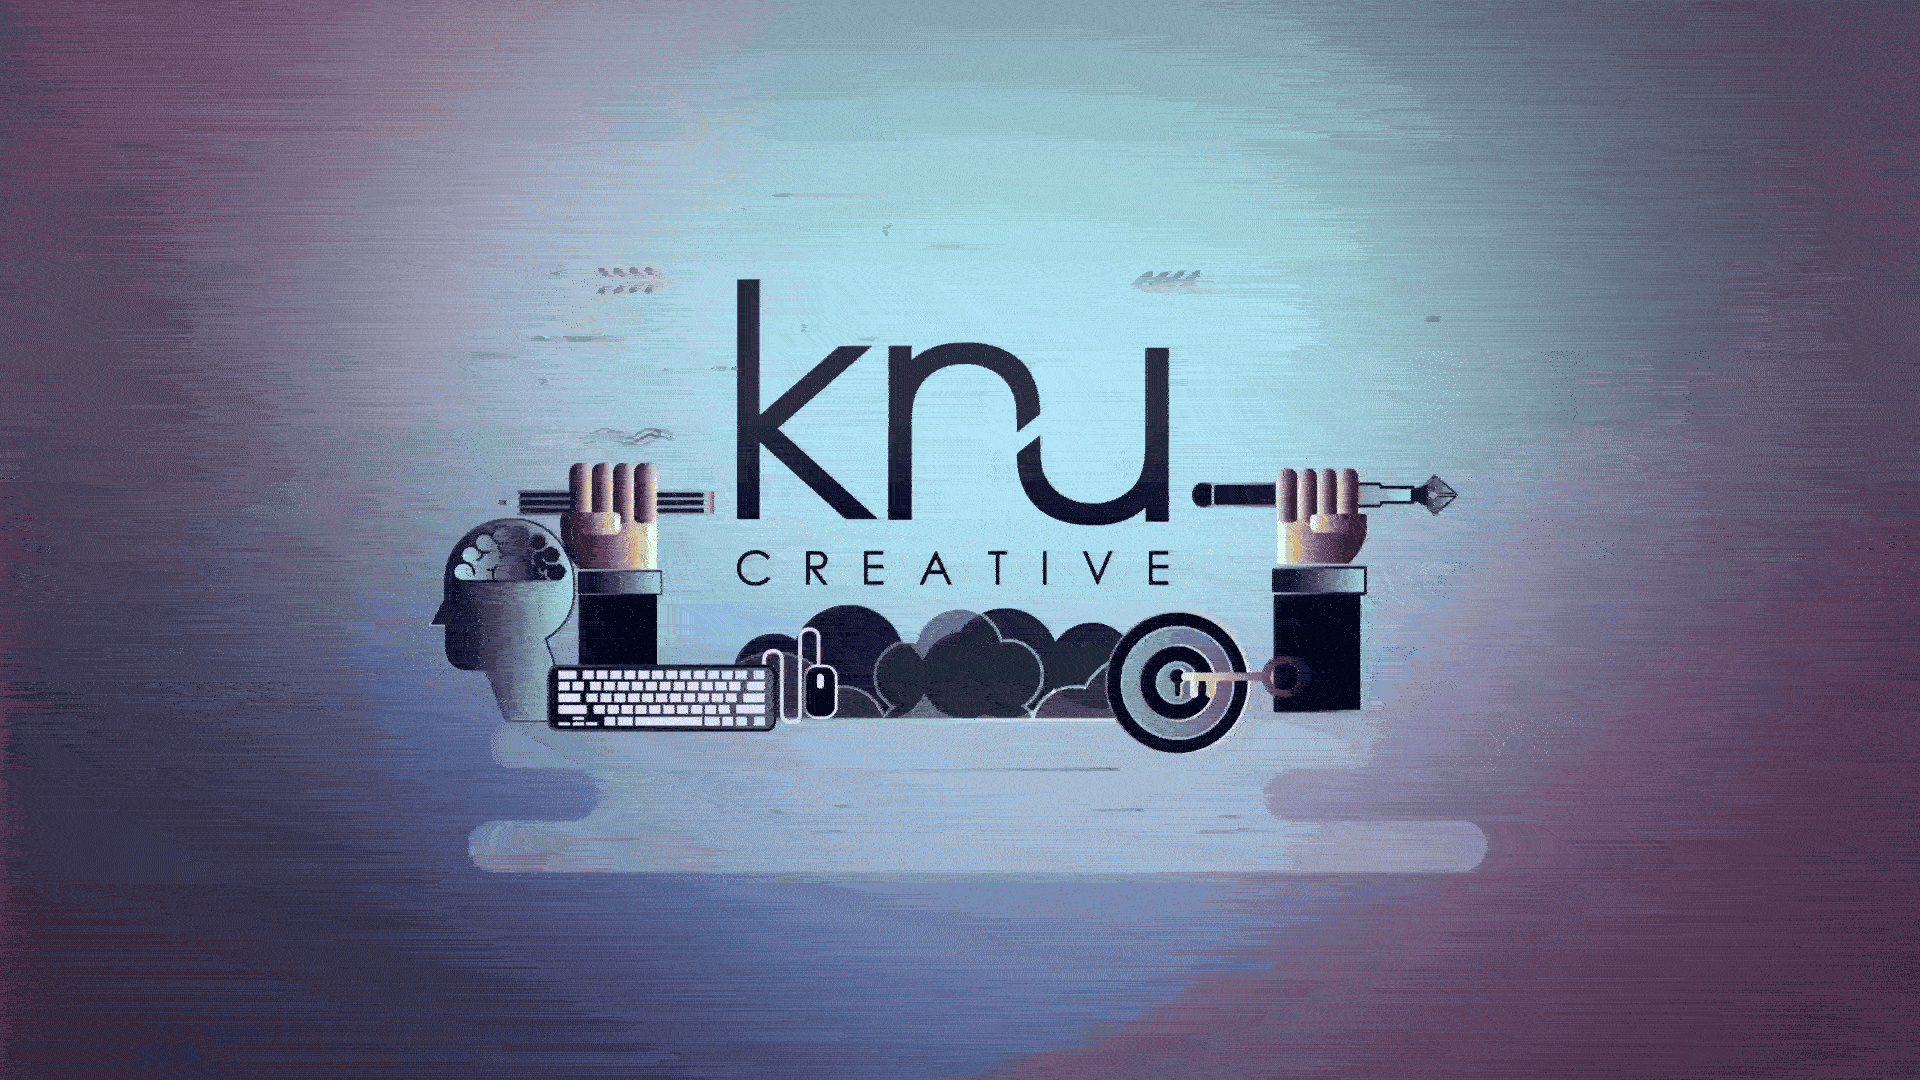 The logo for knu creative.